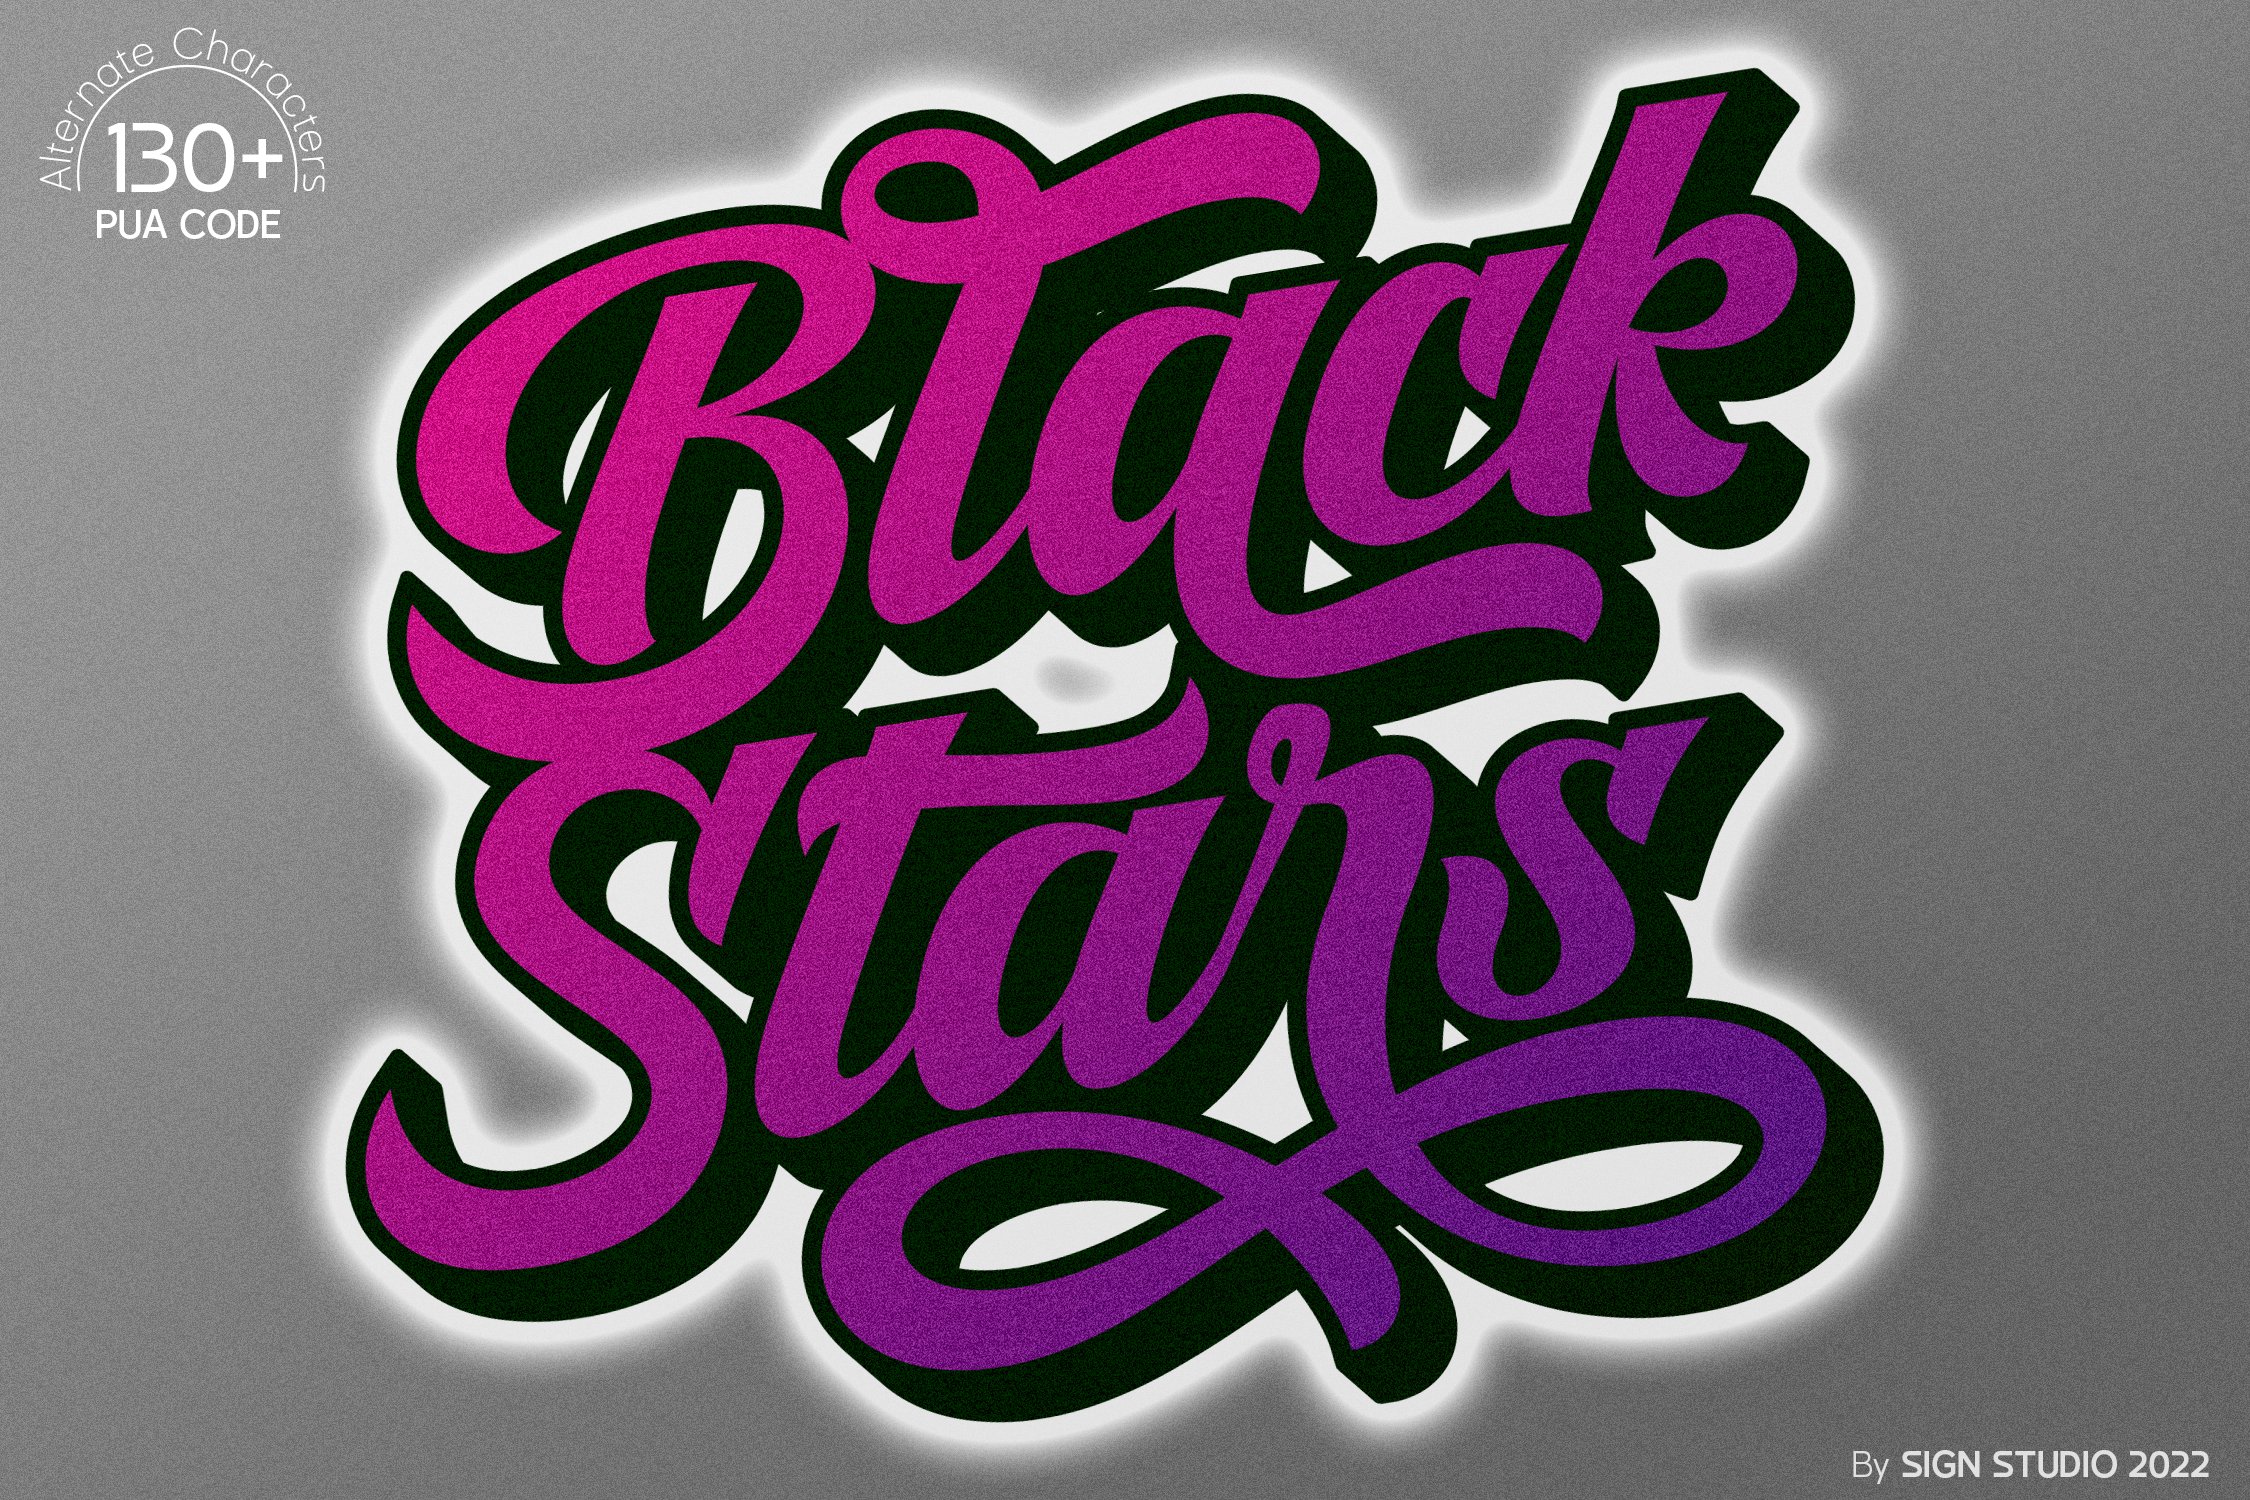 Black Stars - Graffiti Style cover image.